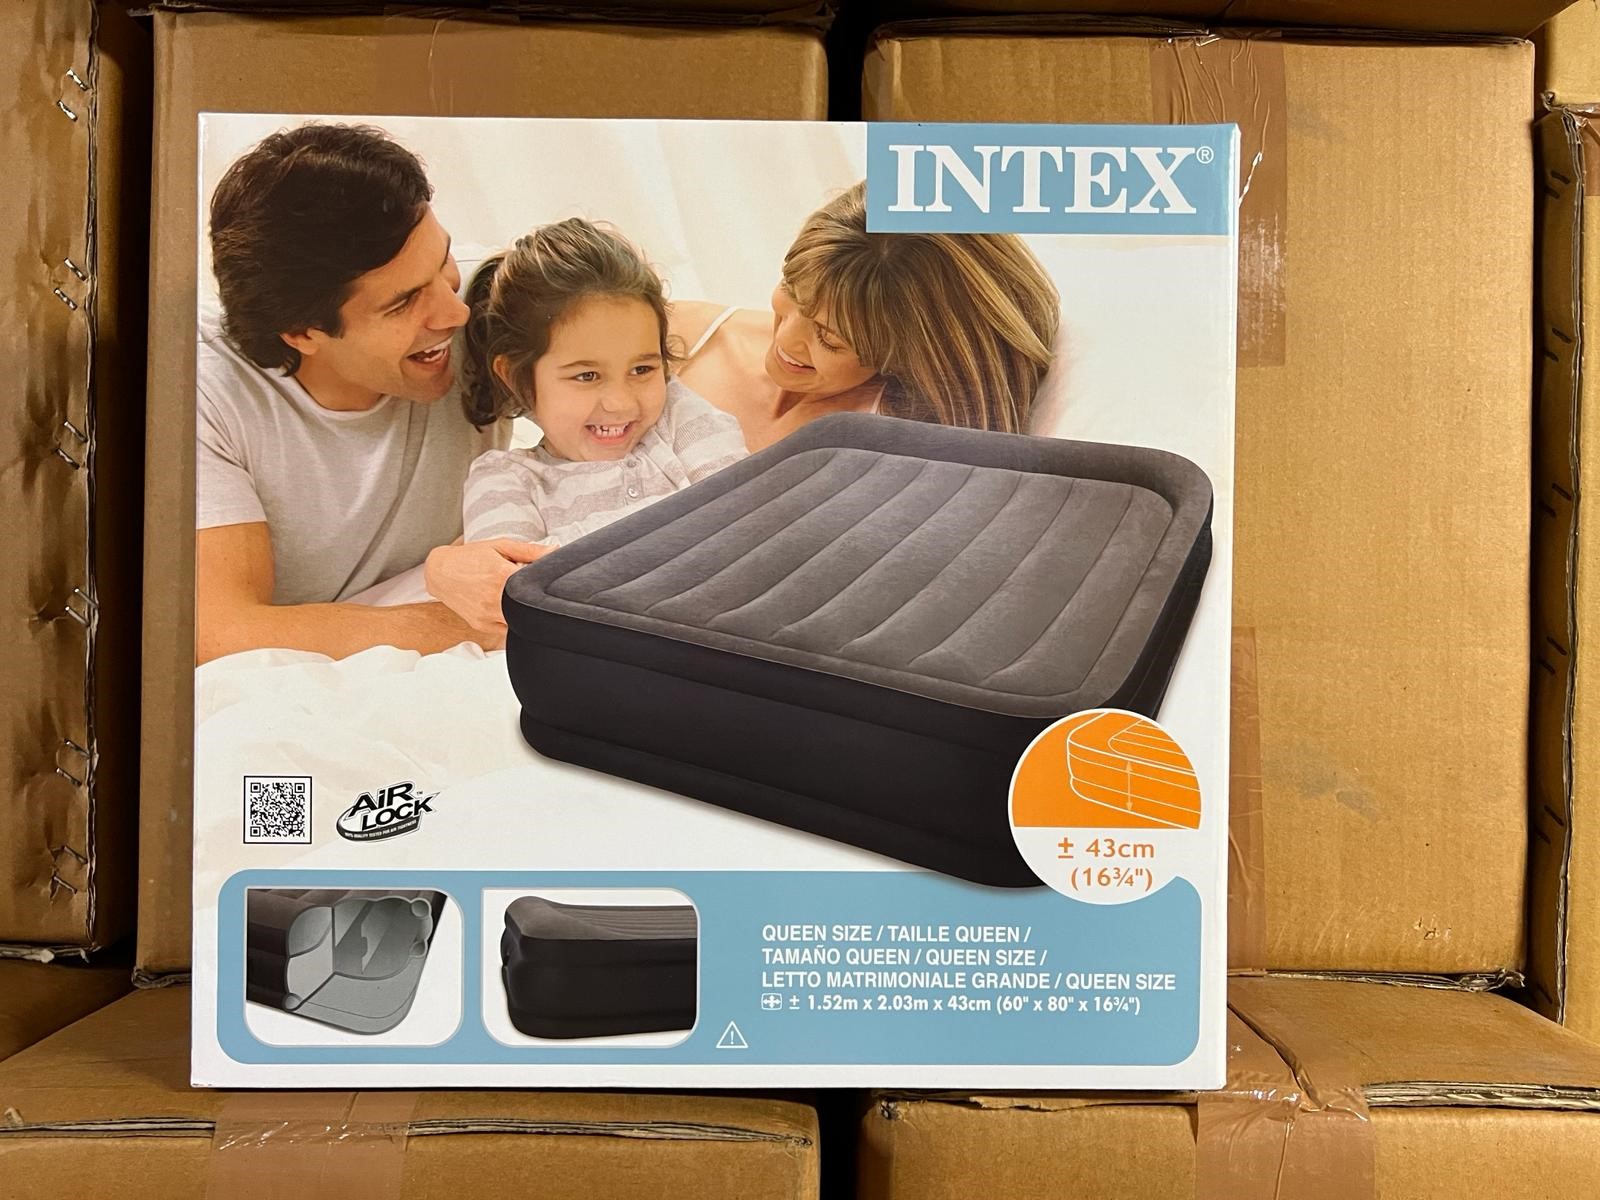 New Boxed Intex Blow Up Queen Bed (1.5M X 2.03M X 43cm)